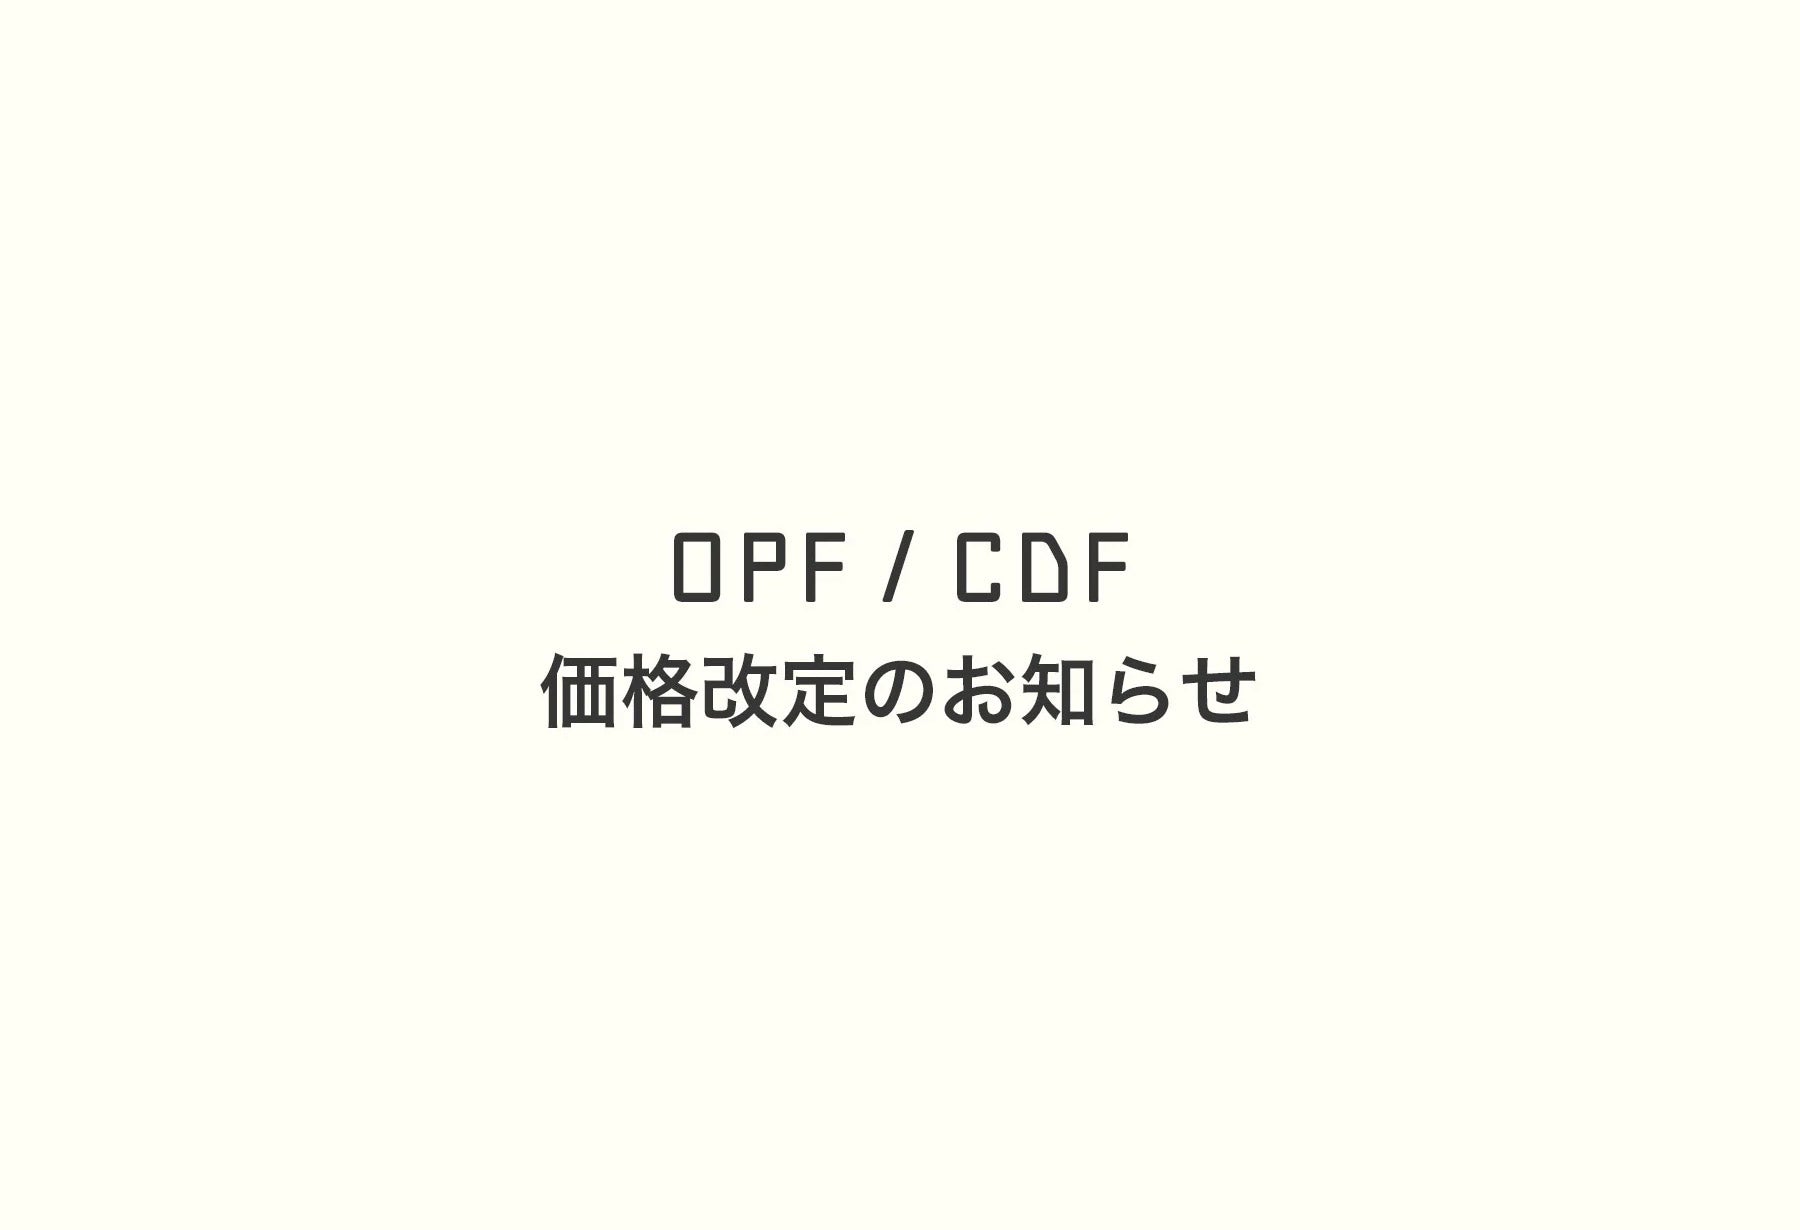 OPF / CDF price revision notice